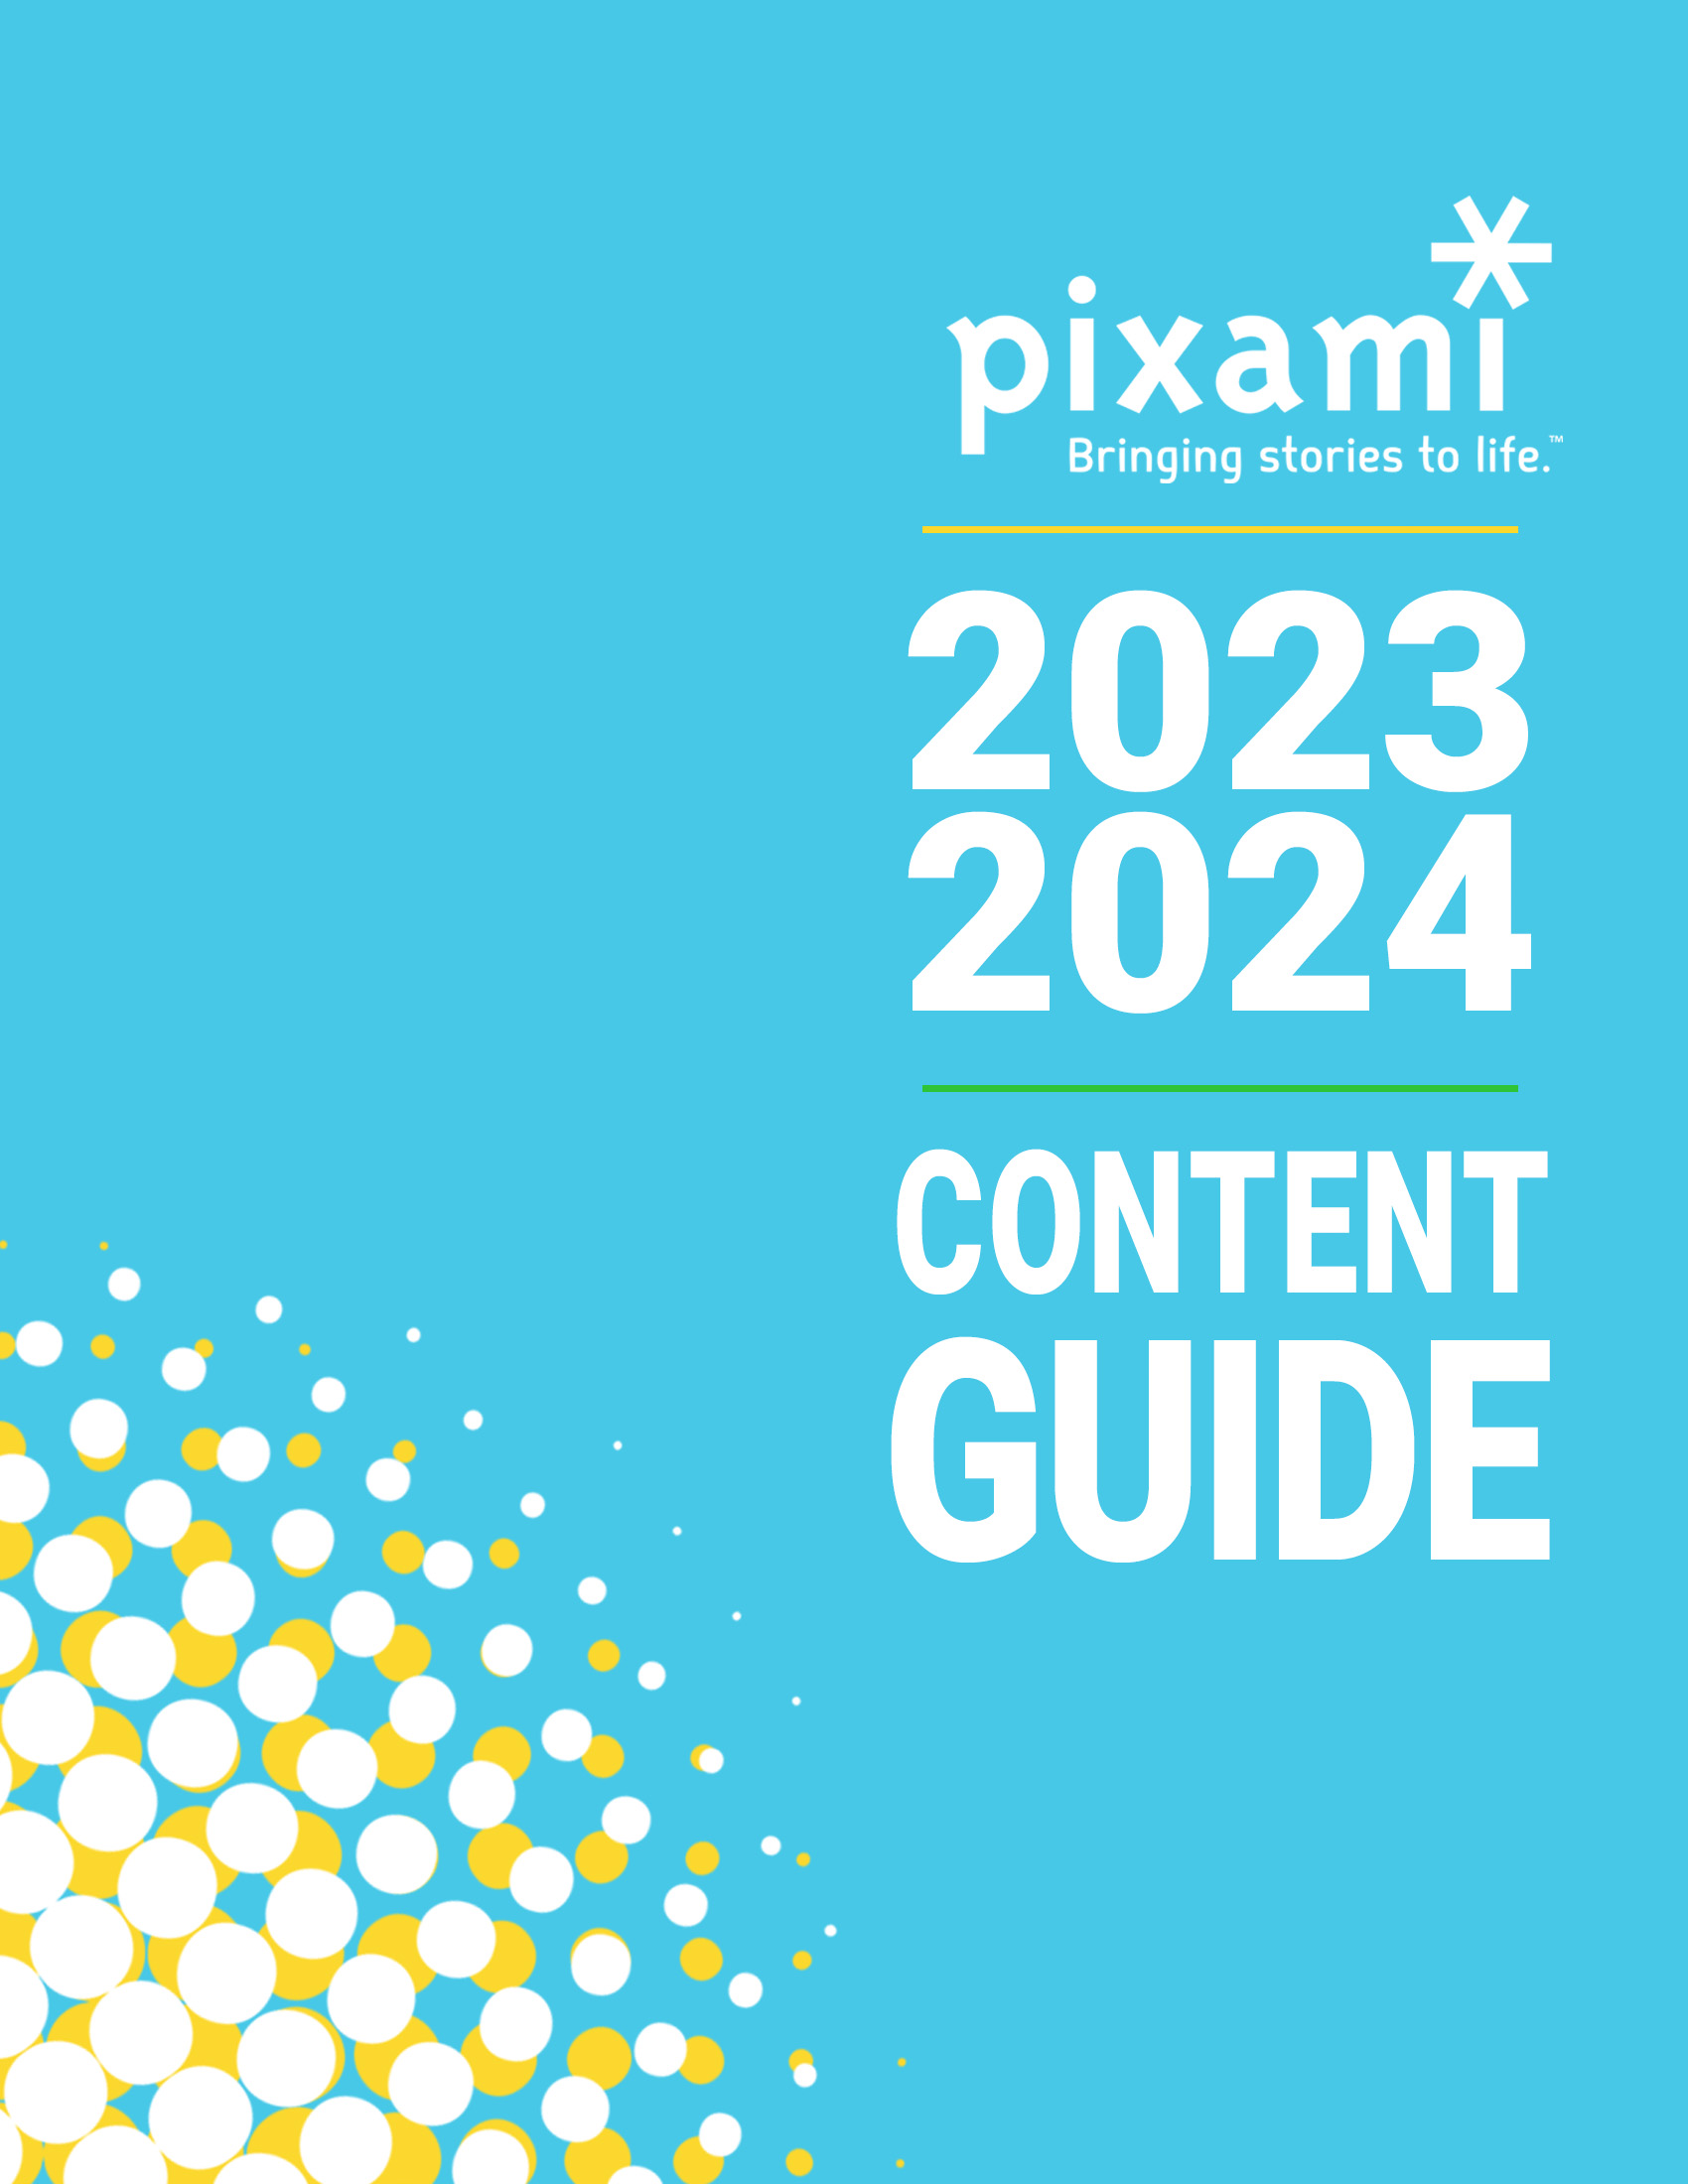 pixami-2023-34-content-guide.jpg